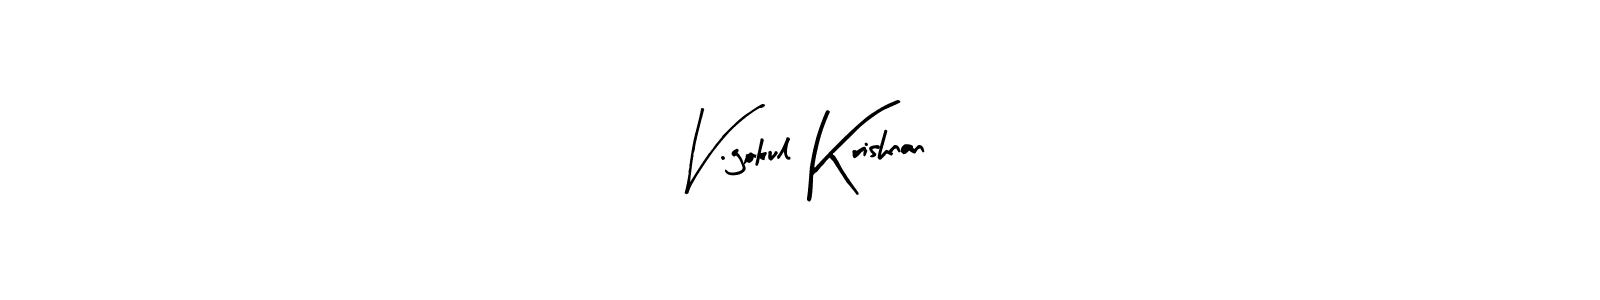 Make a beautiful signature design for name V.gokul Krishnan. Use this online signature maker to create a handwritten signature for free. V.gokul Krishnan signature style 8 images and pictures png